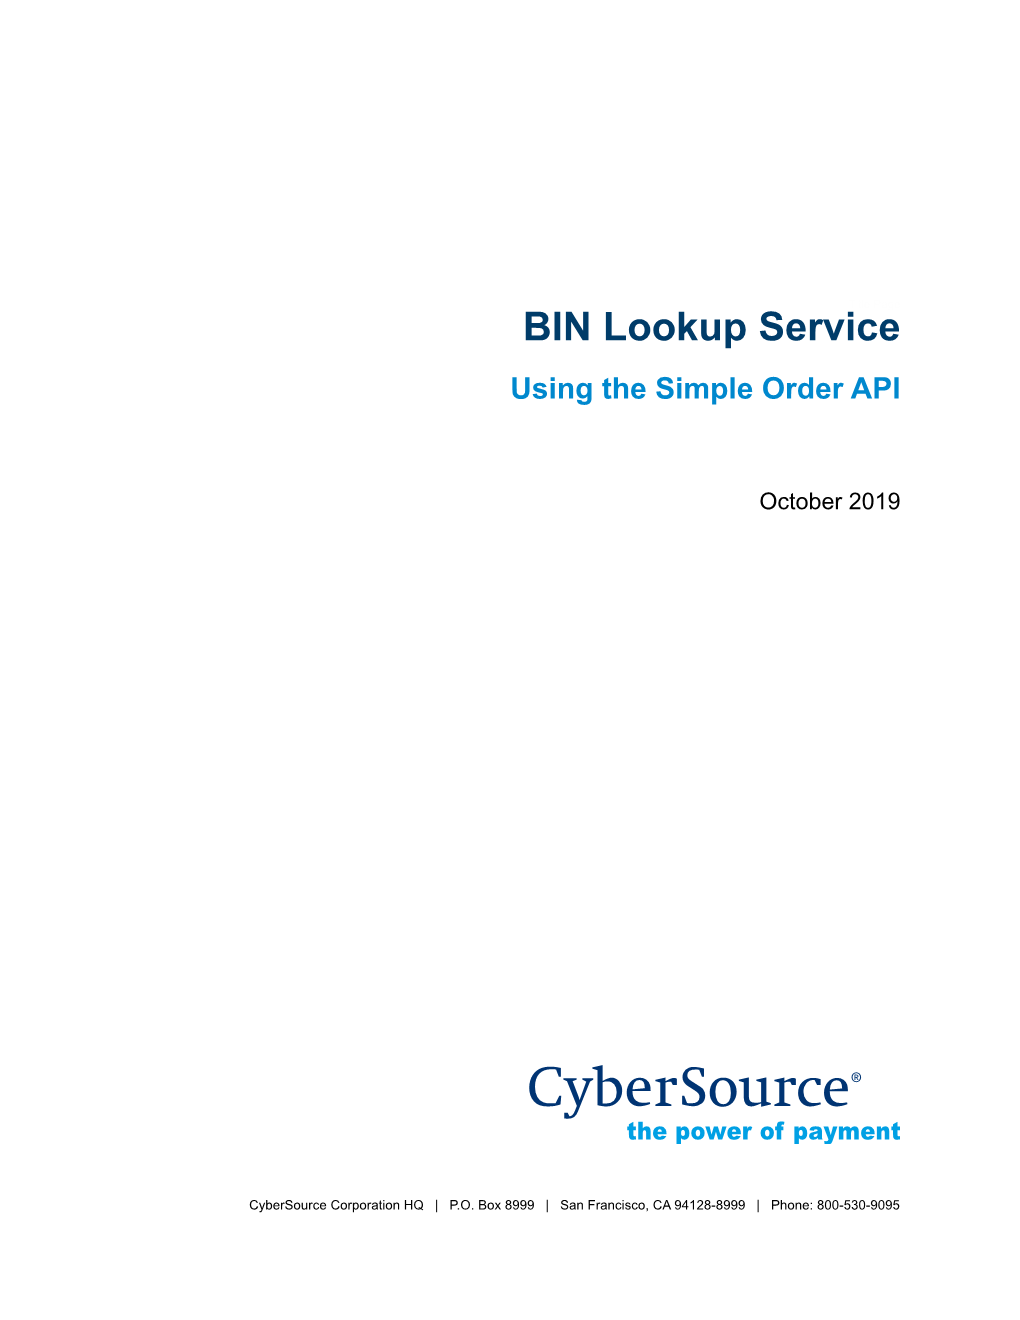 BIN Lookup Service Using the Simple Order API